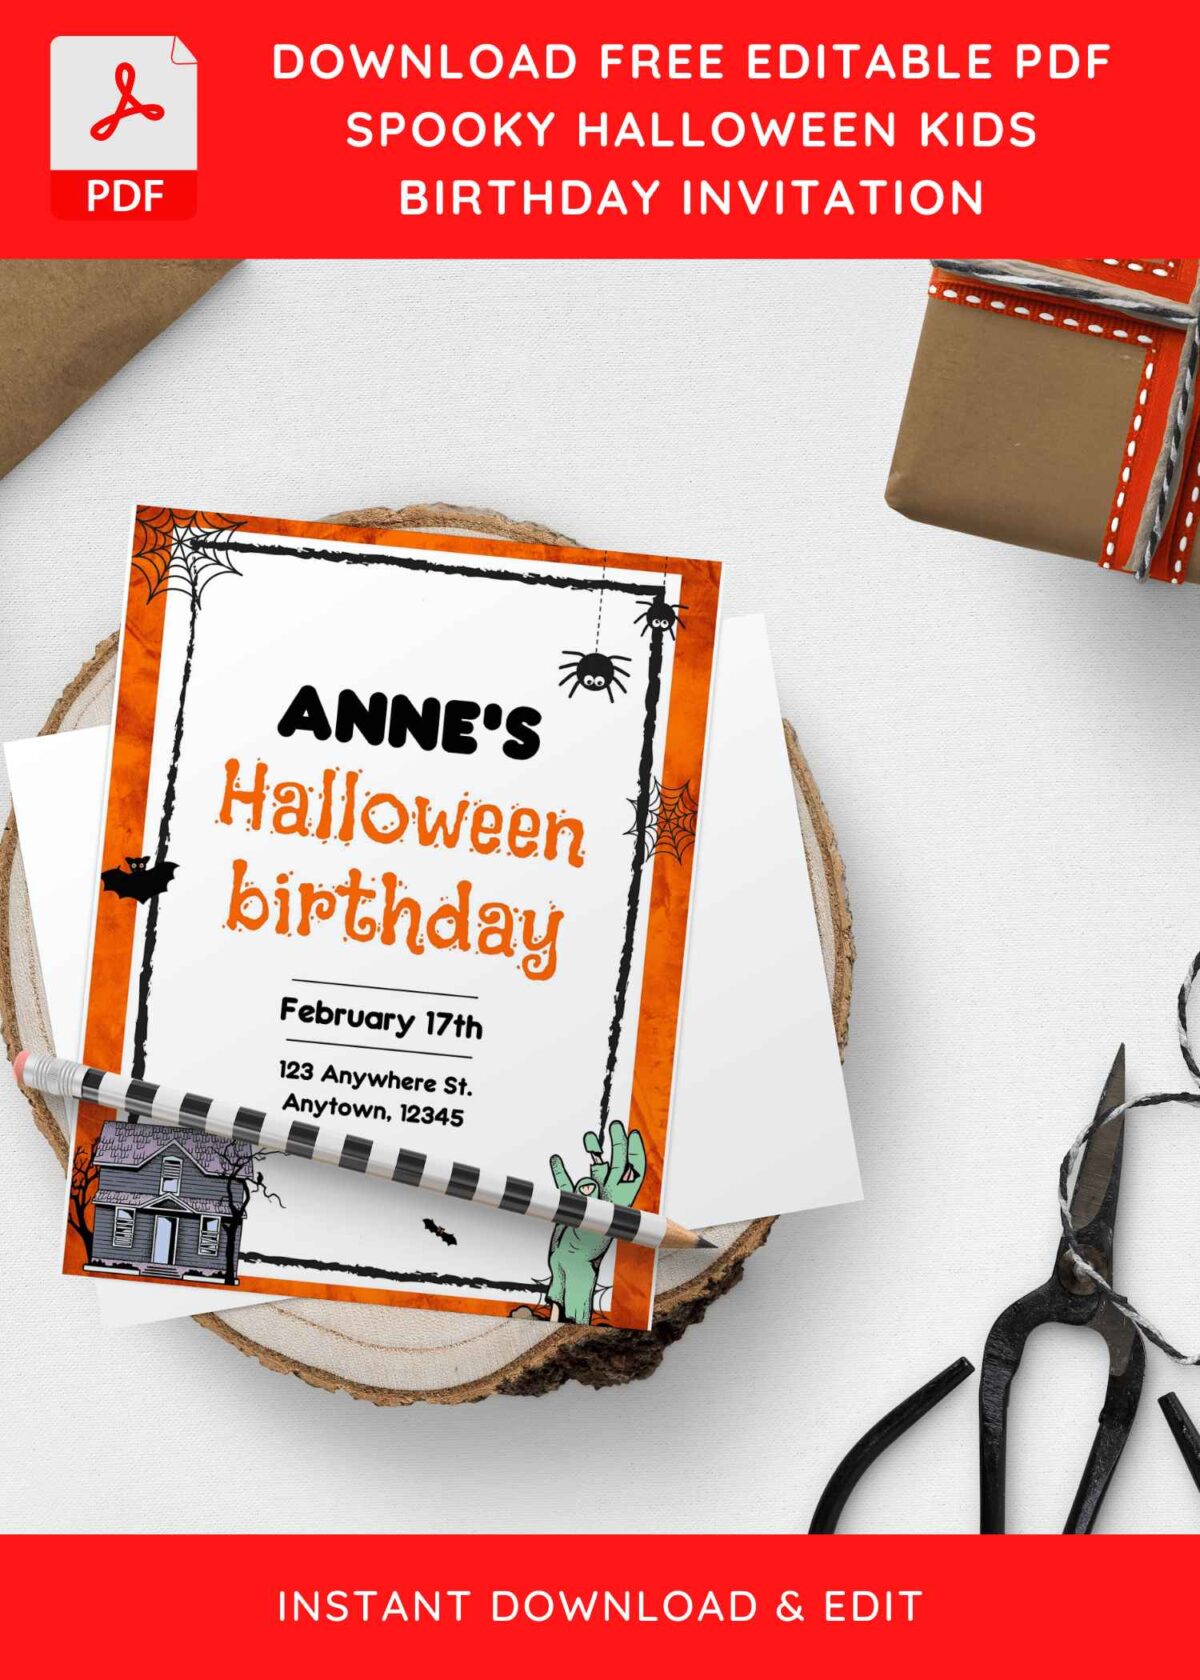 (Free Editable PDF) Spooky Halloween Kids Birthday Invitation Templates H